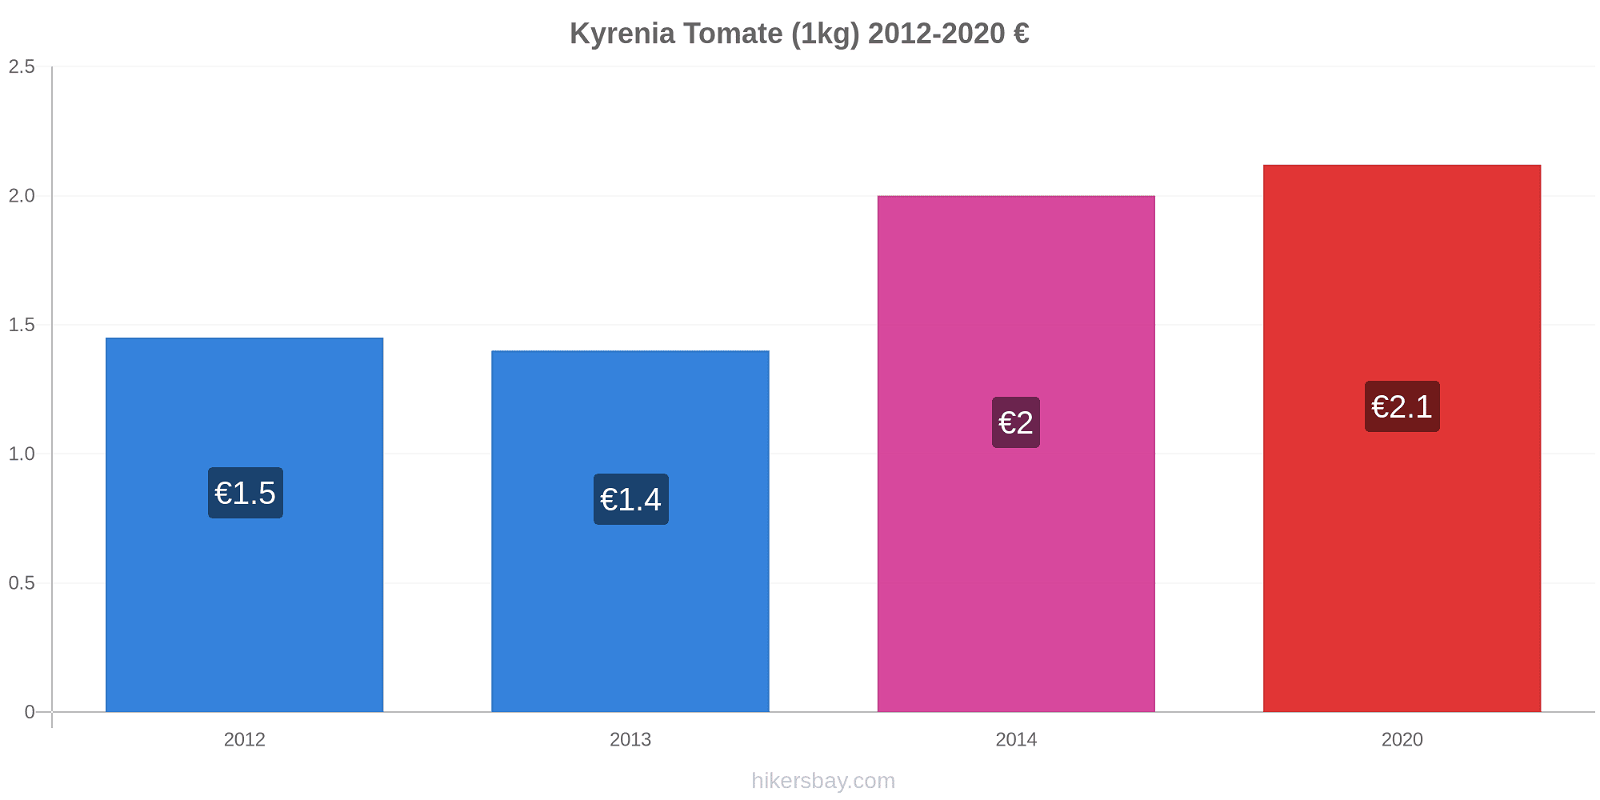 Kyrenia changements de prix Tomate (1kg) hikersbay.com